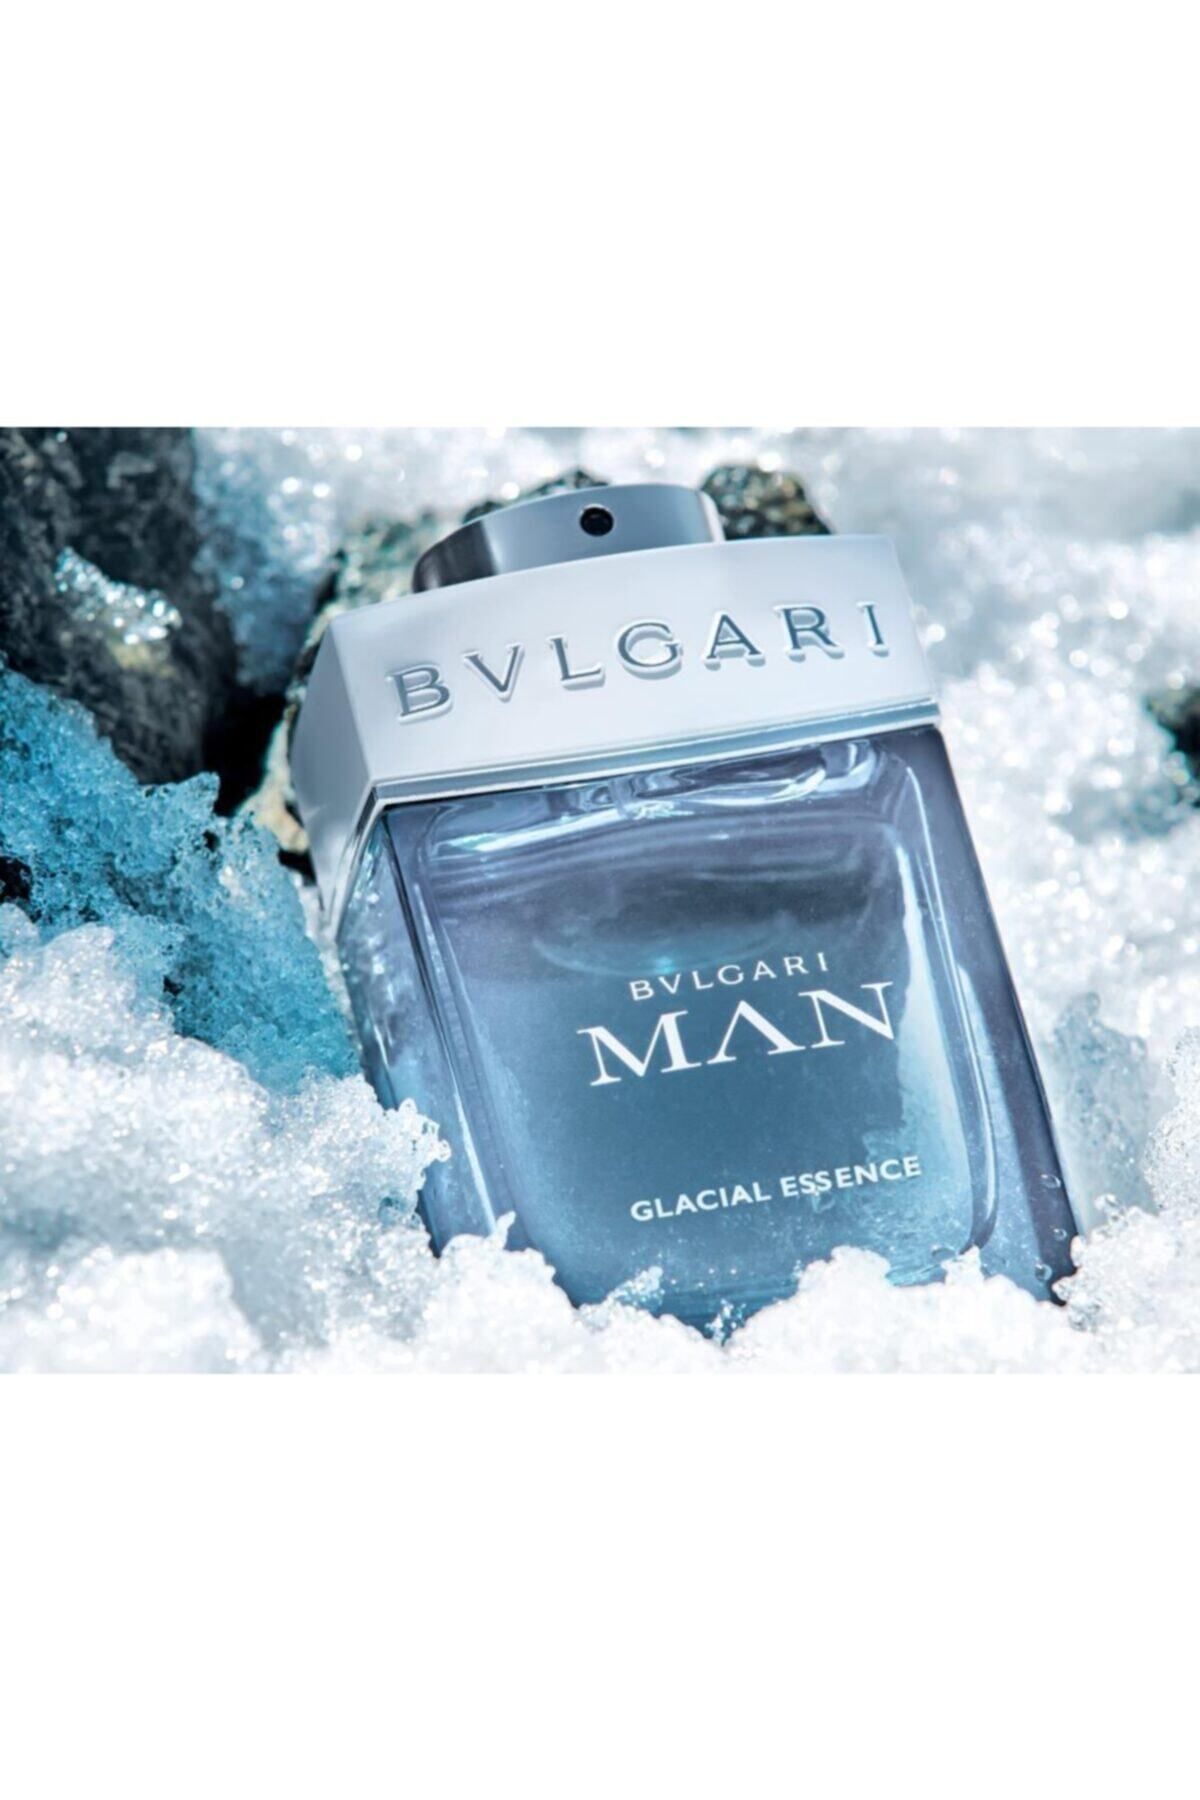 Bvlgari عطر مردانه Man Glacial Essence ادوپرفیوم 100 ml